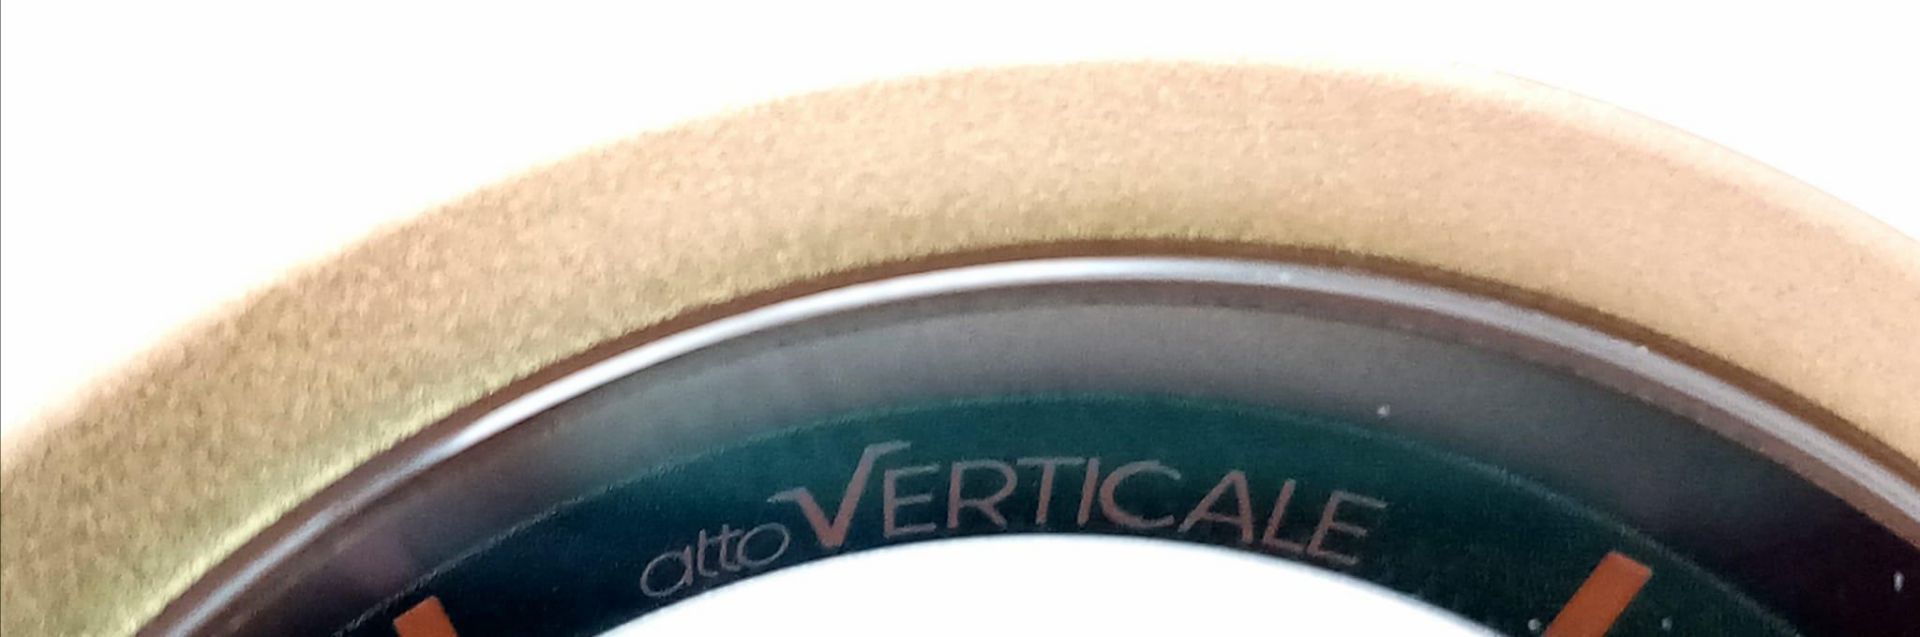 A Verticale Mechanical Top Winder Gents Watch. Green leather strap. Gold tone ceramic gilded - Bild 3 aus 7